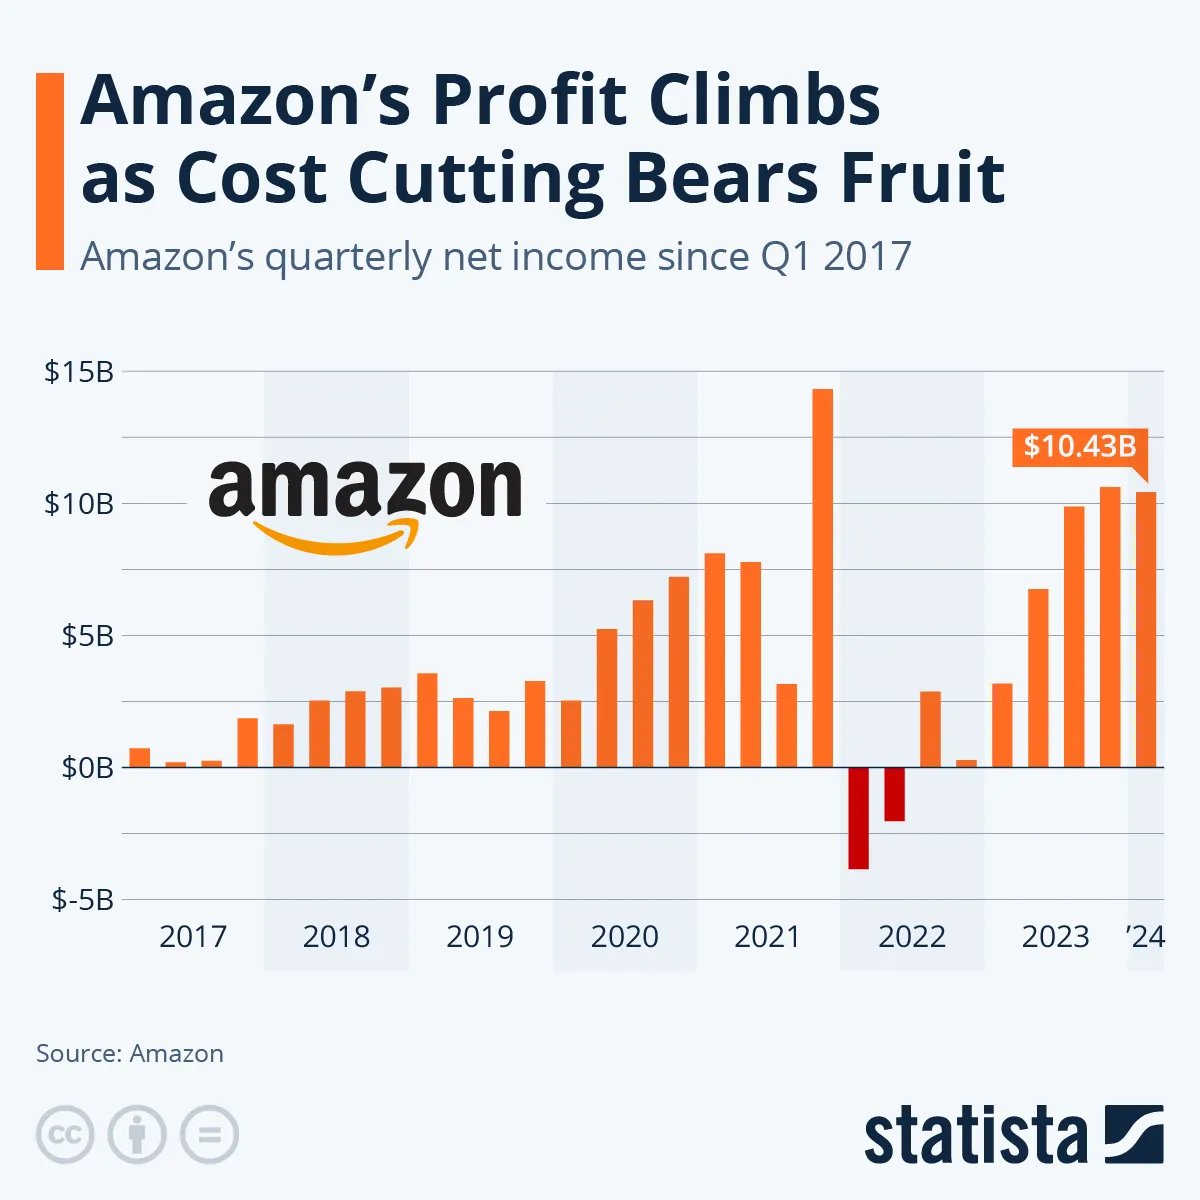 Amazon's #profit climbs as cost-cutting bears fruit - #business #ecommerce @technicitymag @gvalan @DrFerdowsi @junjudapi @enricomolinari @avrohomg @kuriharan @fogle_shane @JolaBurnett @techpearce2 @drhiot @JohnMaynardCPA @mary_gambara @stanleychen0402 @pdpsingha